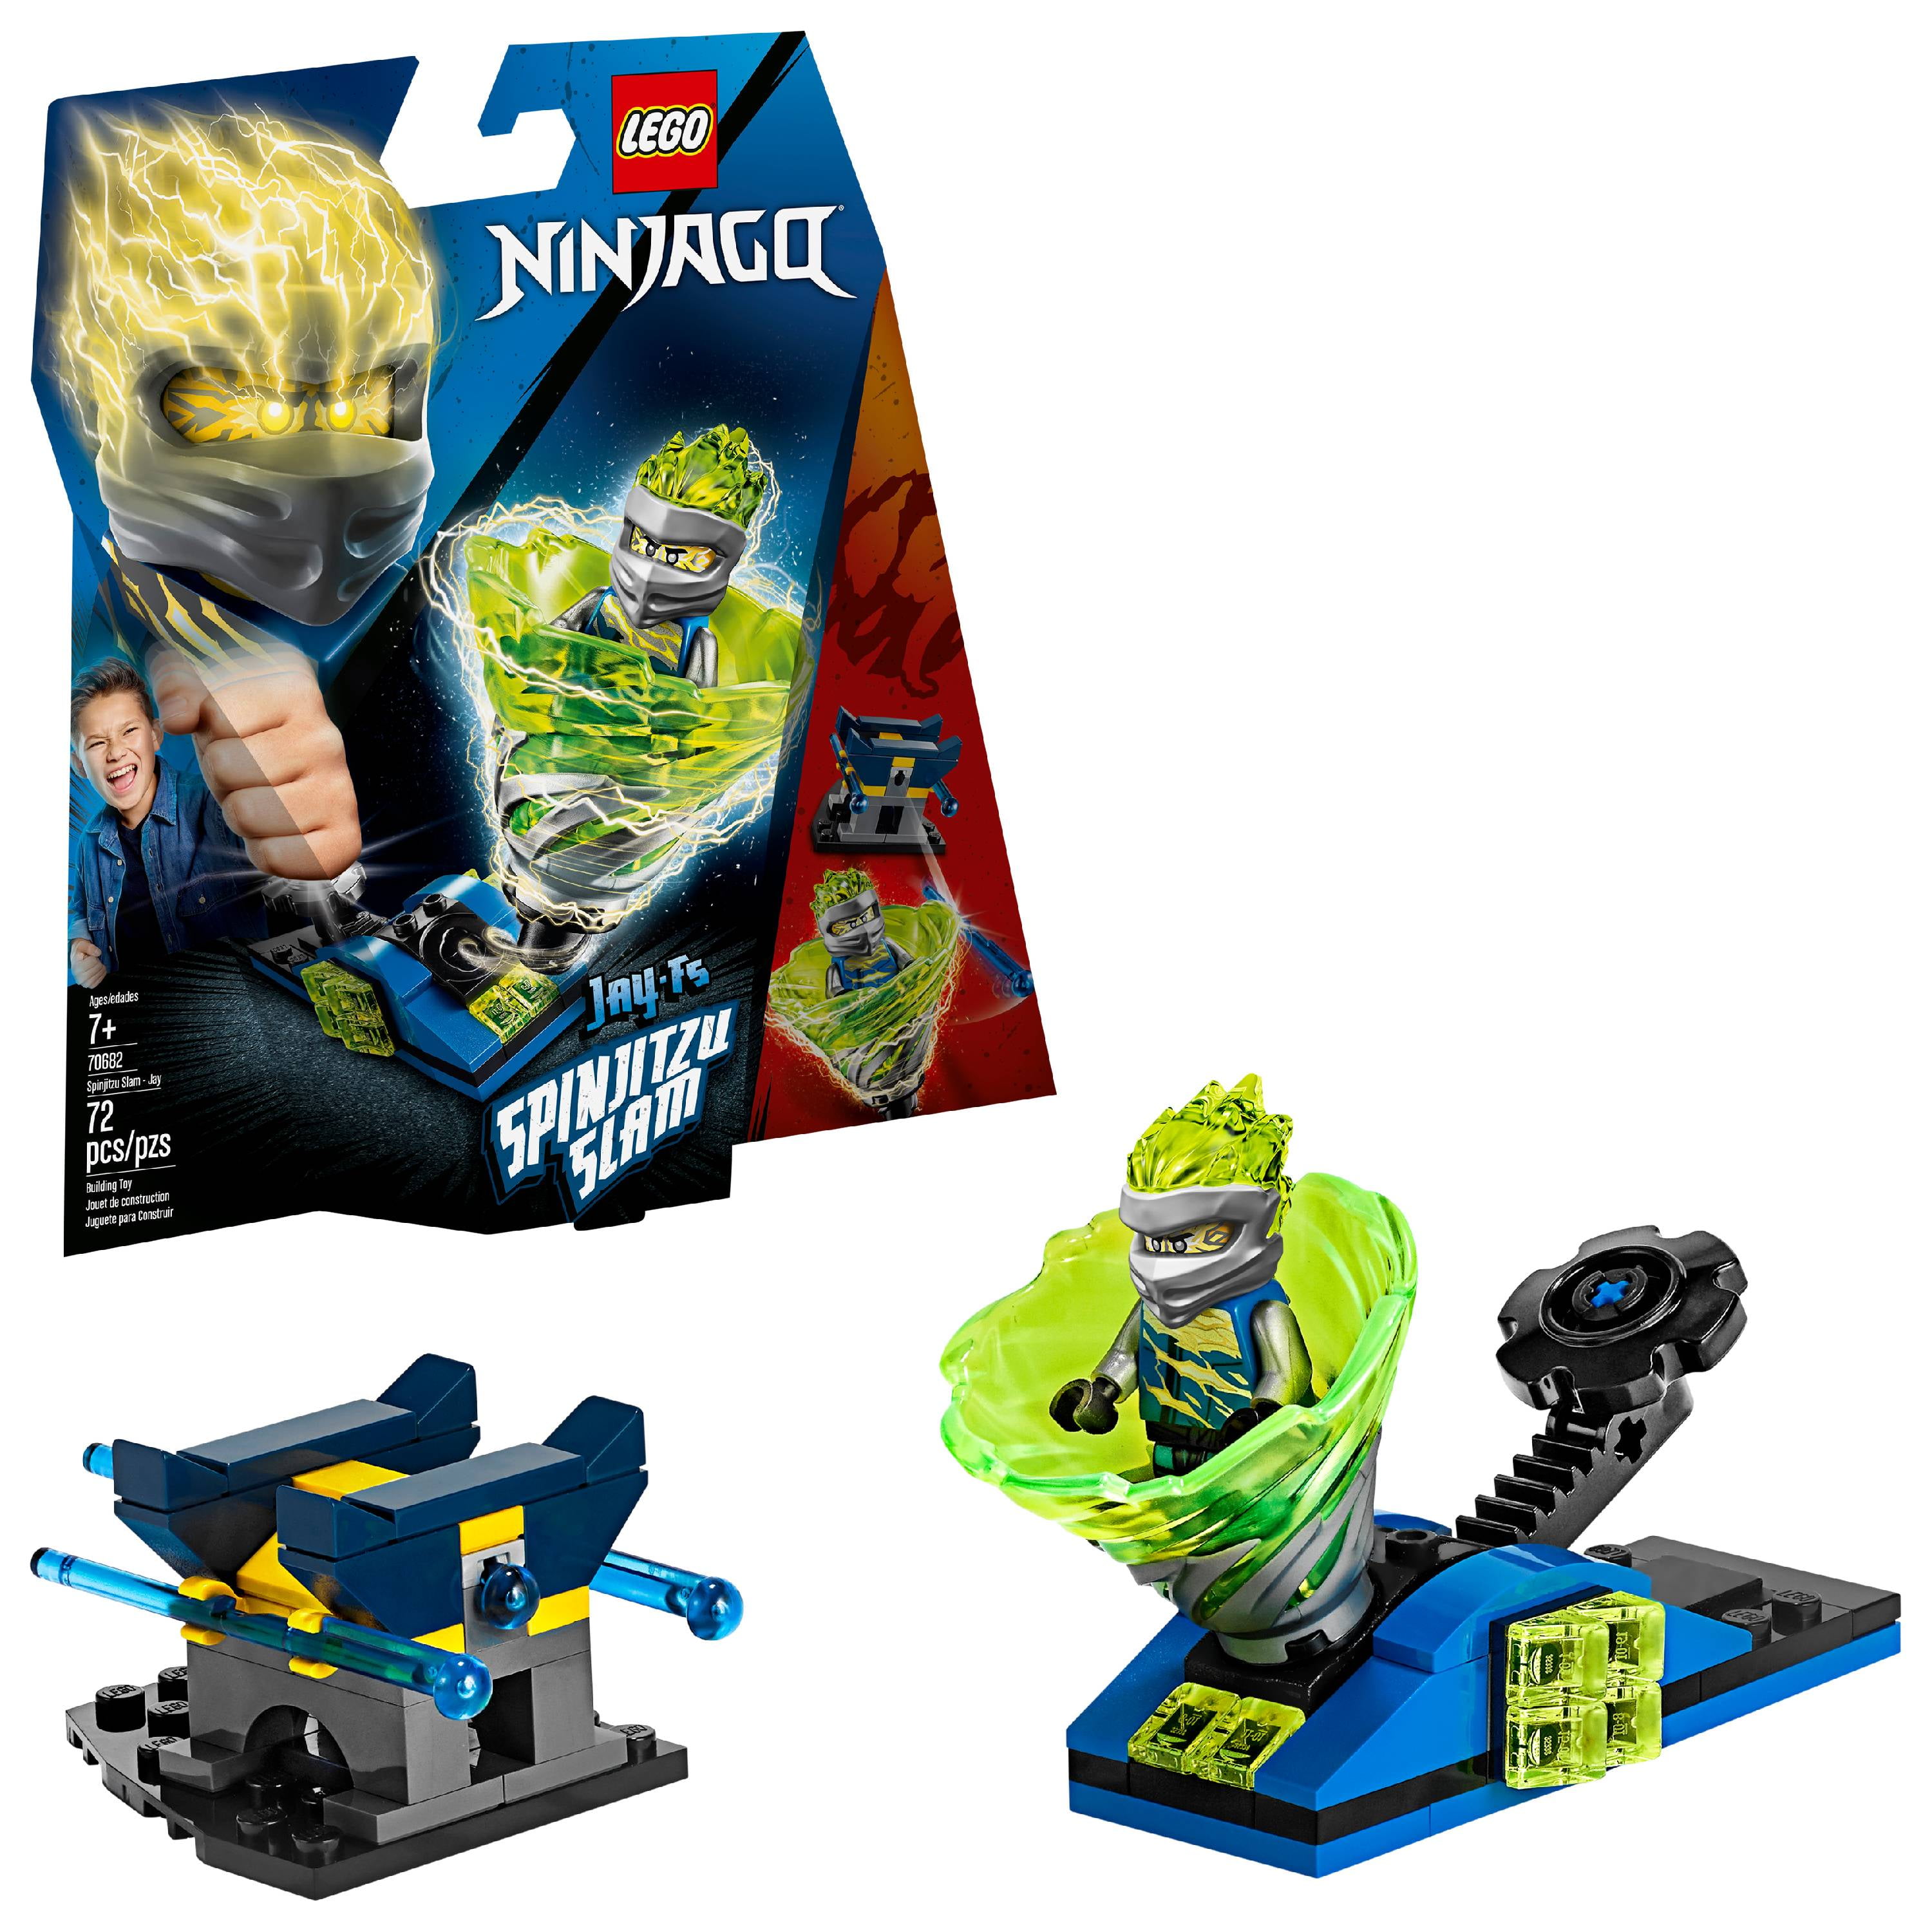 vand blomsten kontrol Minearbejder LEGO Ninjago Spinjitzu Slam - Jay 70682 Tornado Spinner Toy (72 Pieces) -  Walmart.com